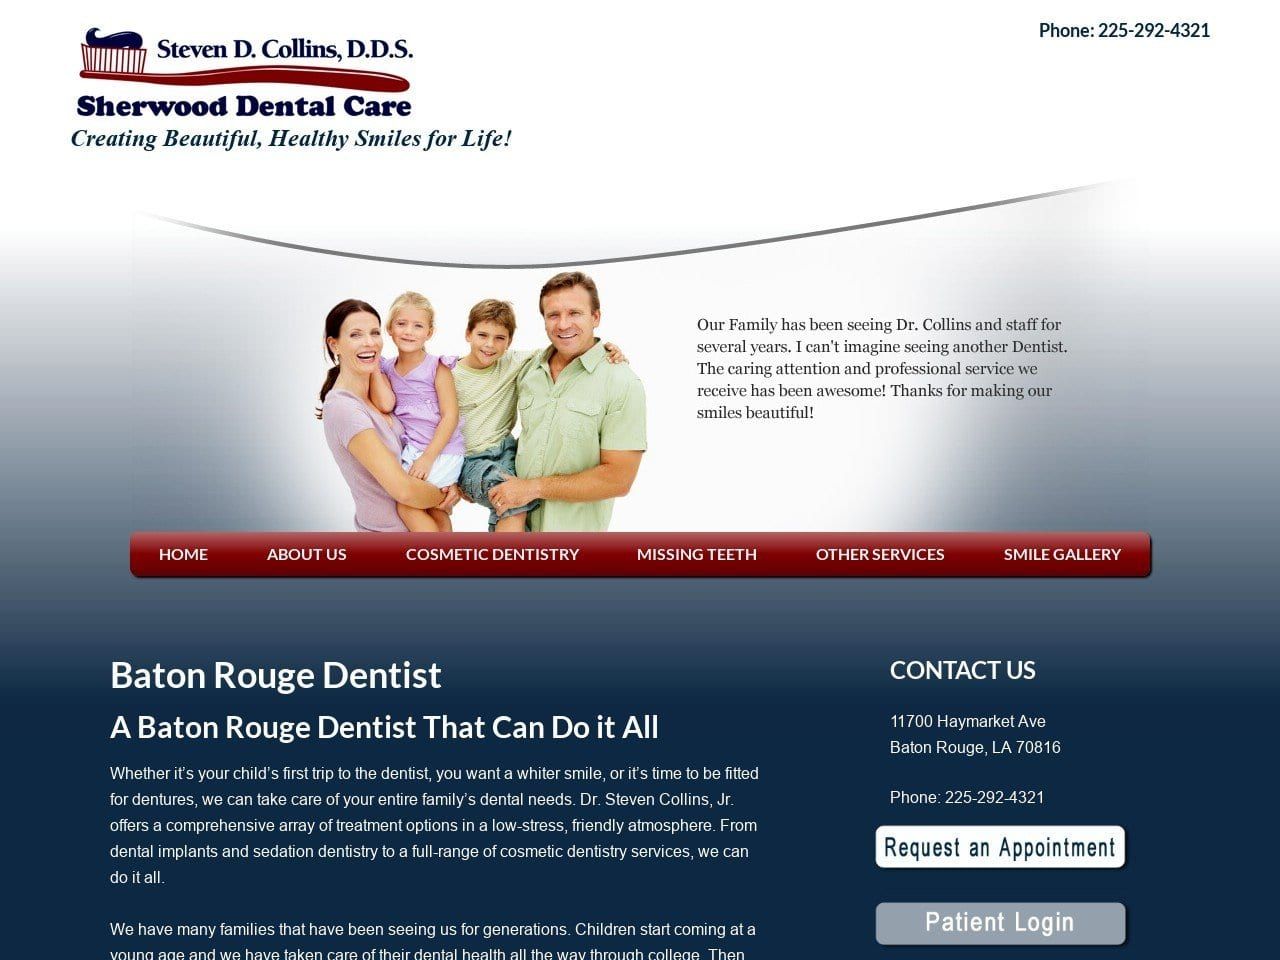 Sherwood Dental Care Website Screenshot from collinsdental.com